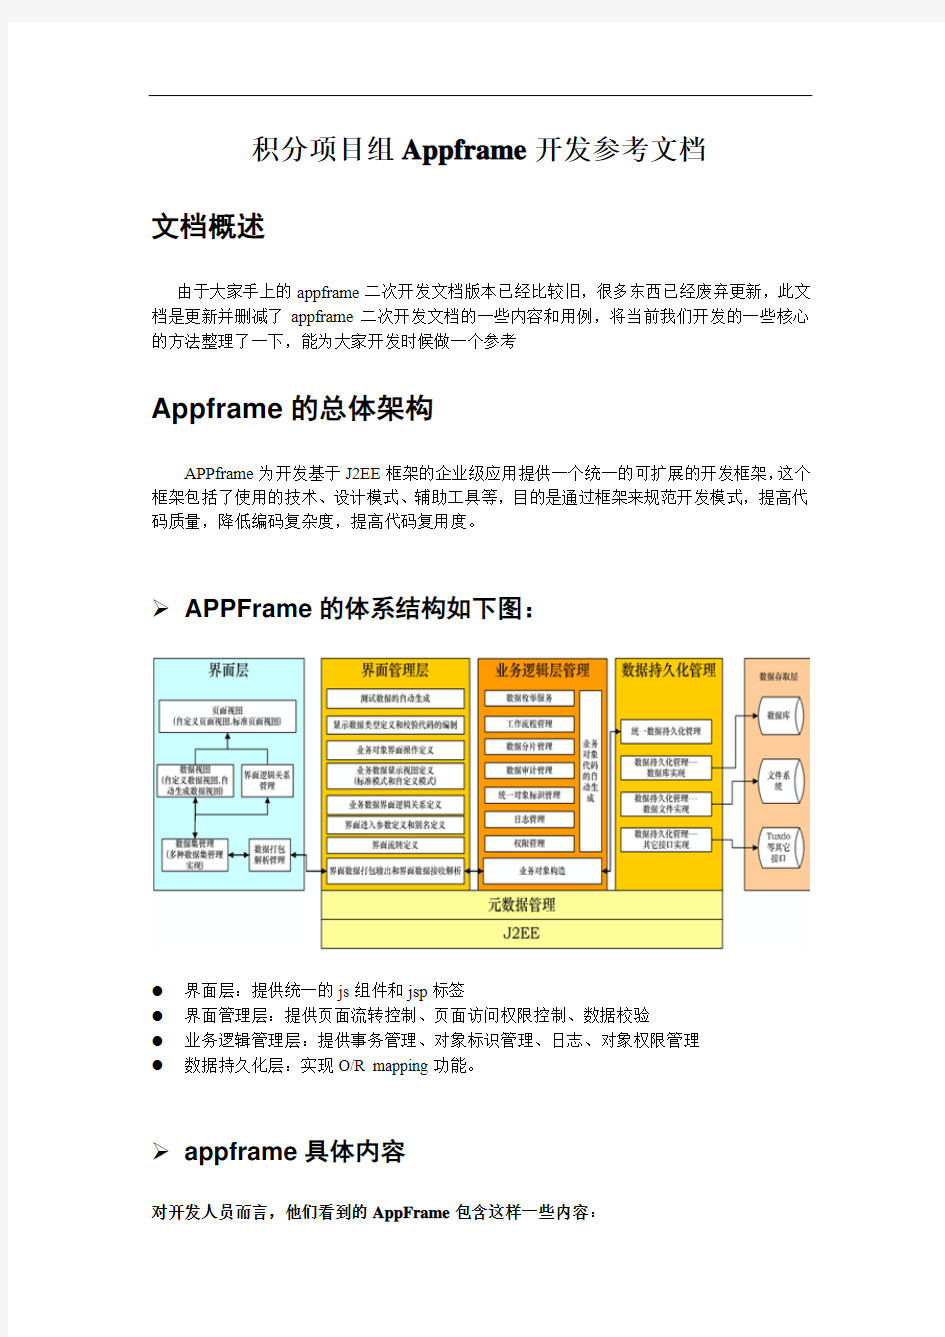 Appframe开发手册-积分项目组